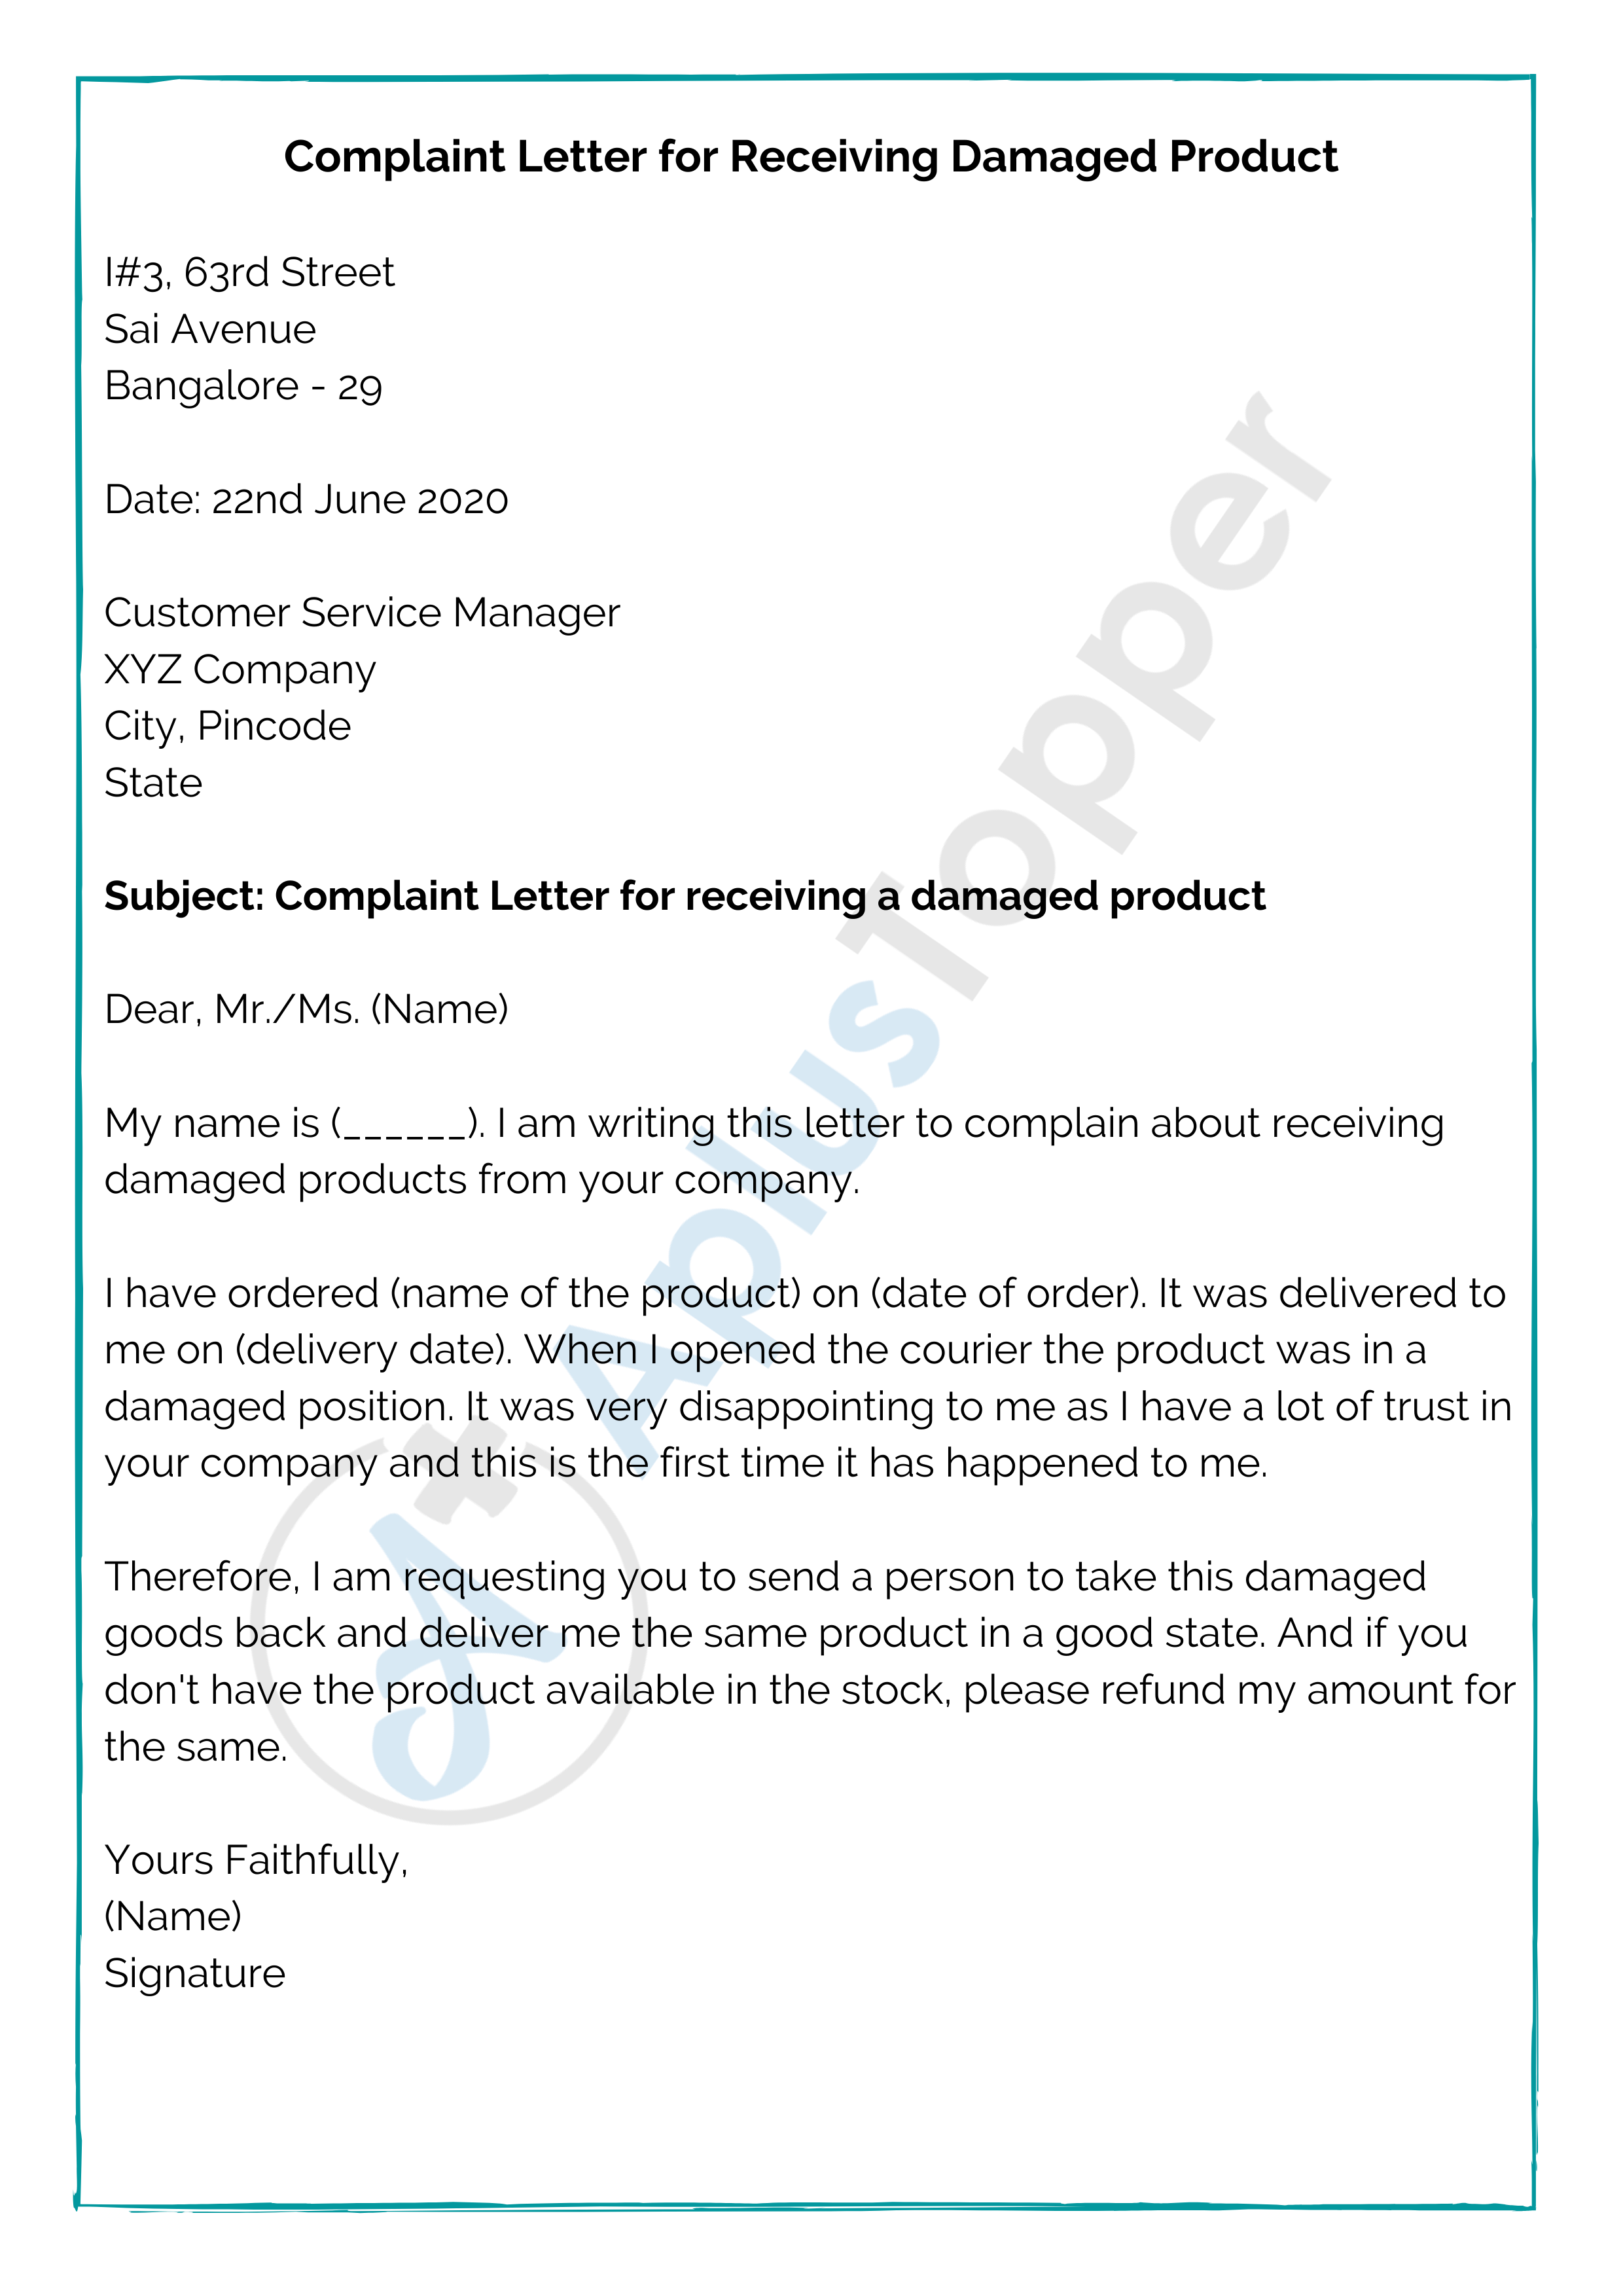 Complaint Letter for Receiving Damaged Goods